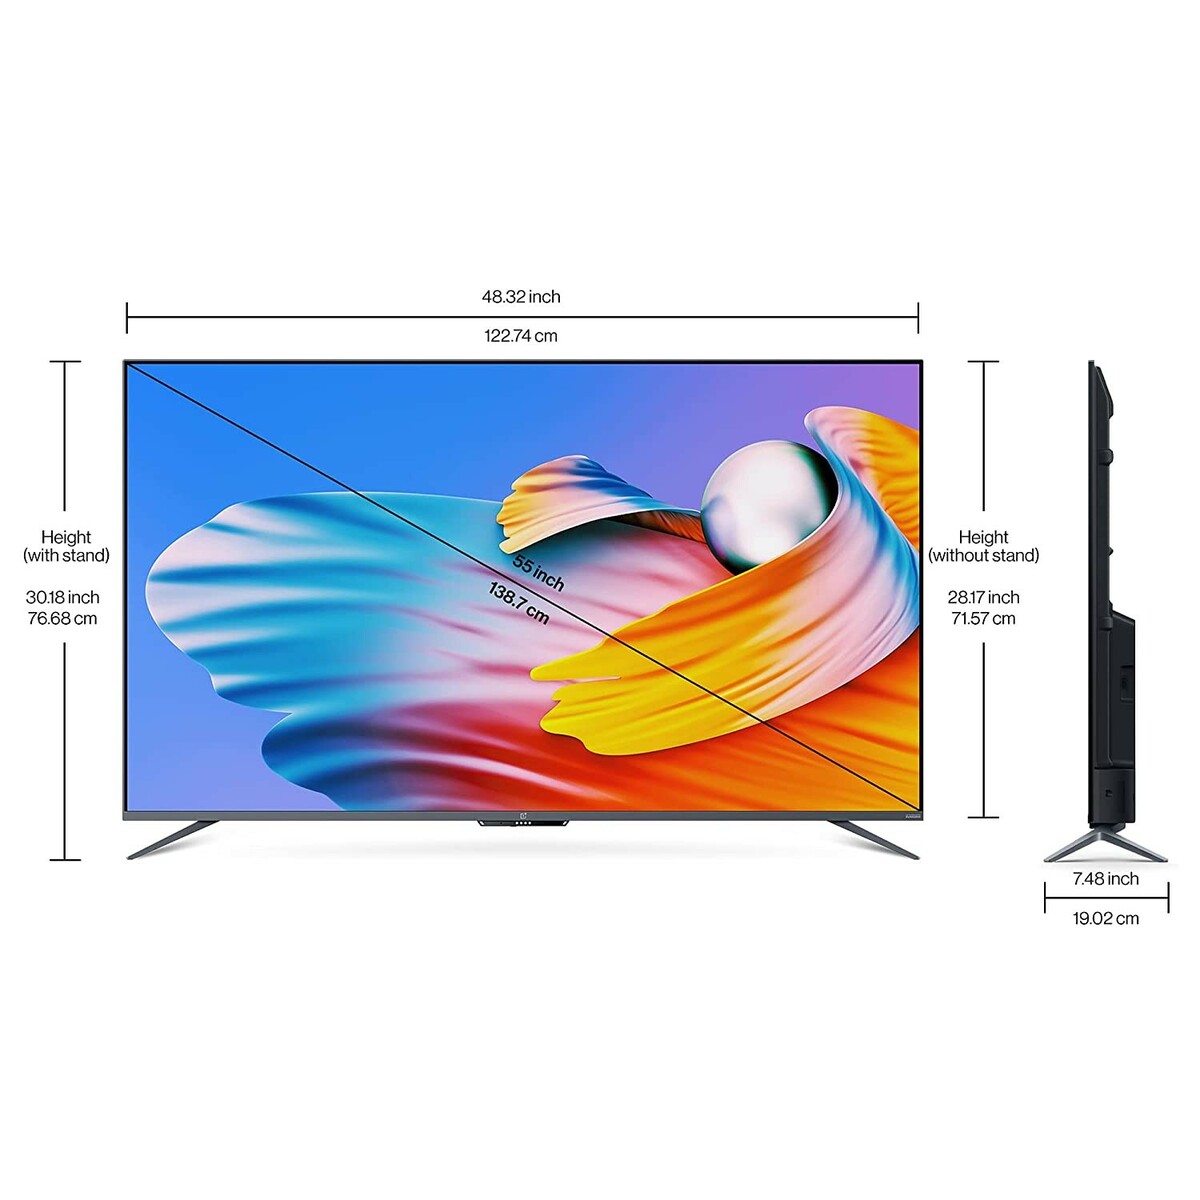 OnePlus 4K Ultra HD LED Smart TV 55U1S 55"